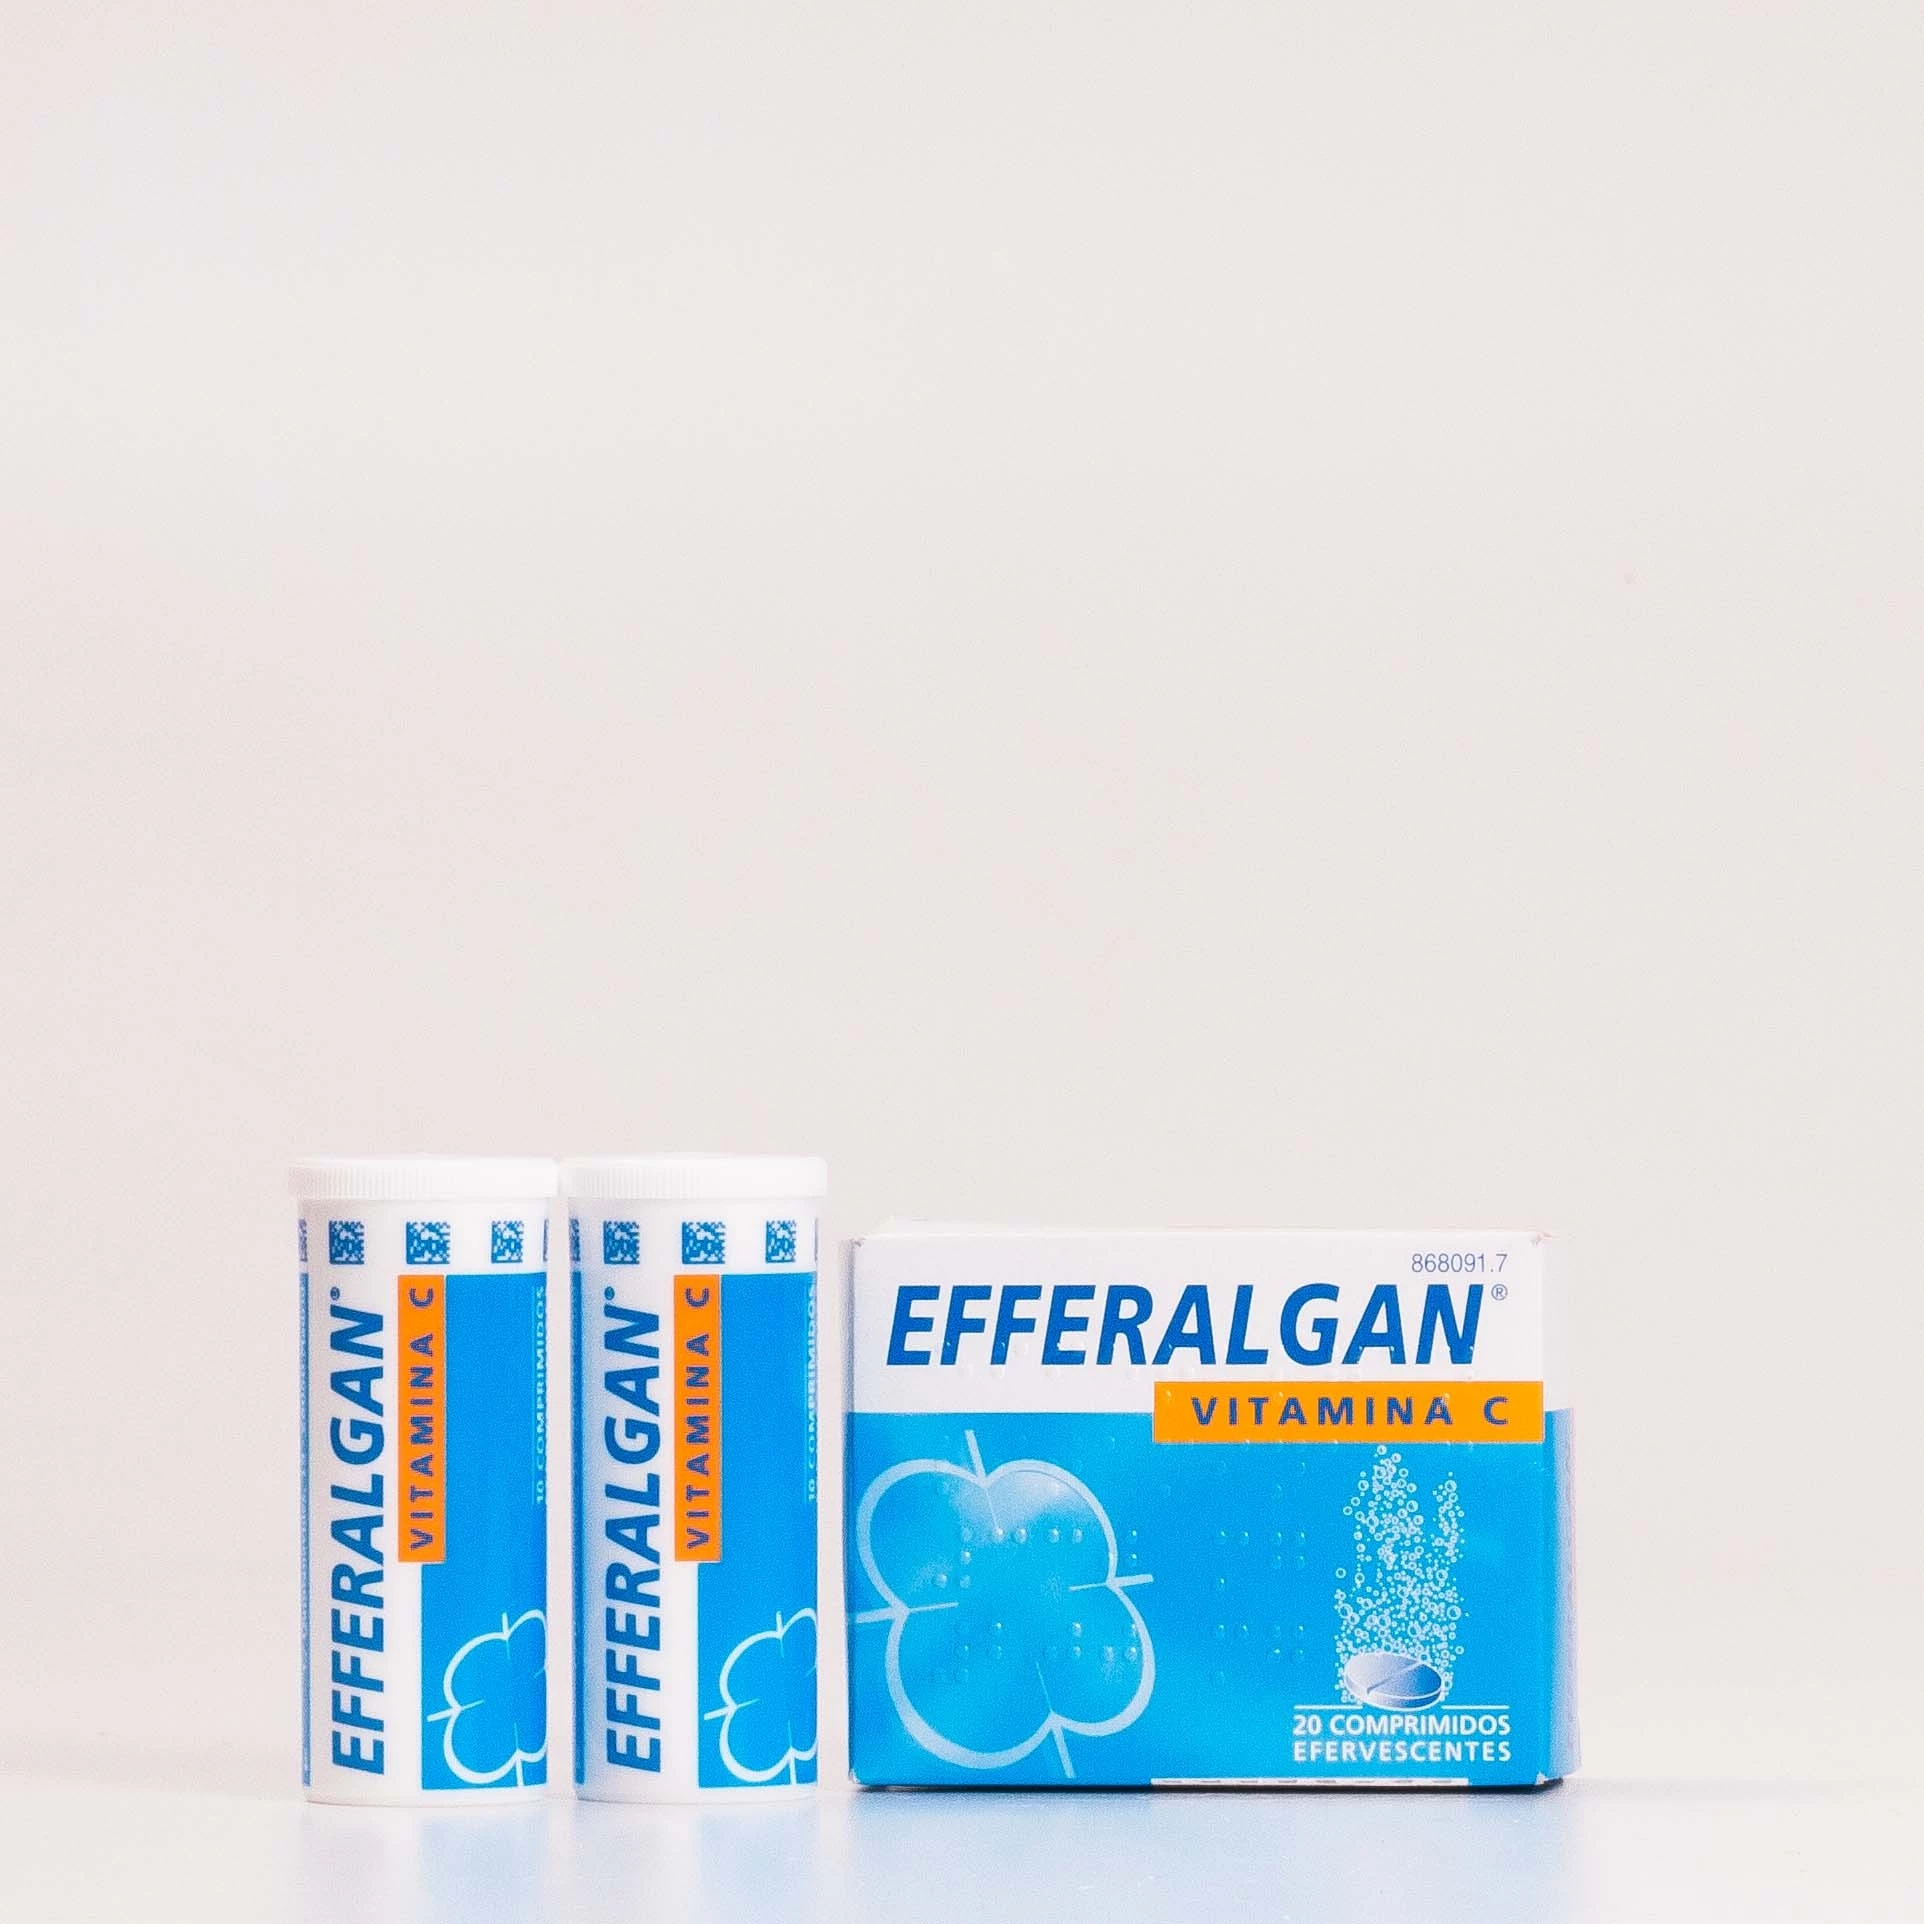 Efferalgan Vitamina C 20 comprimidos efervescentes